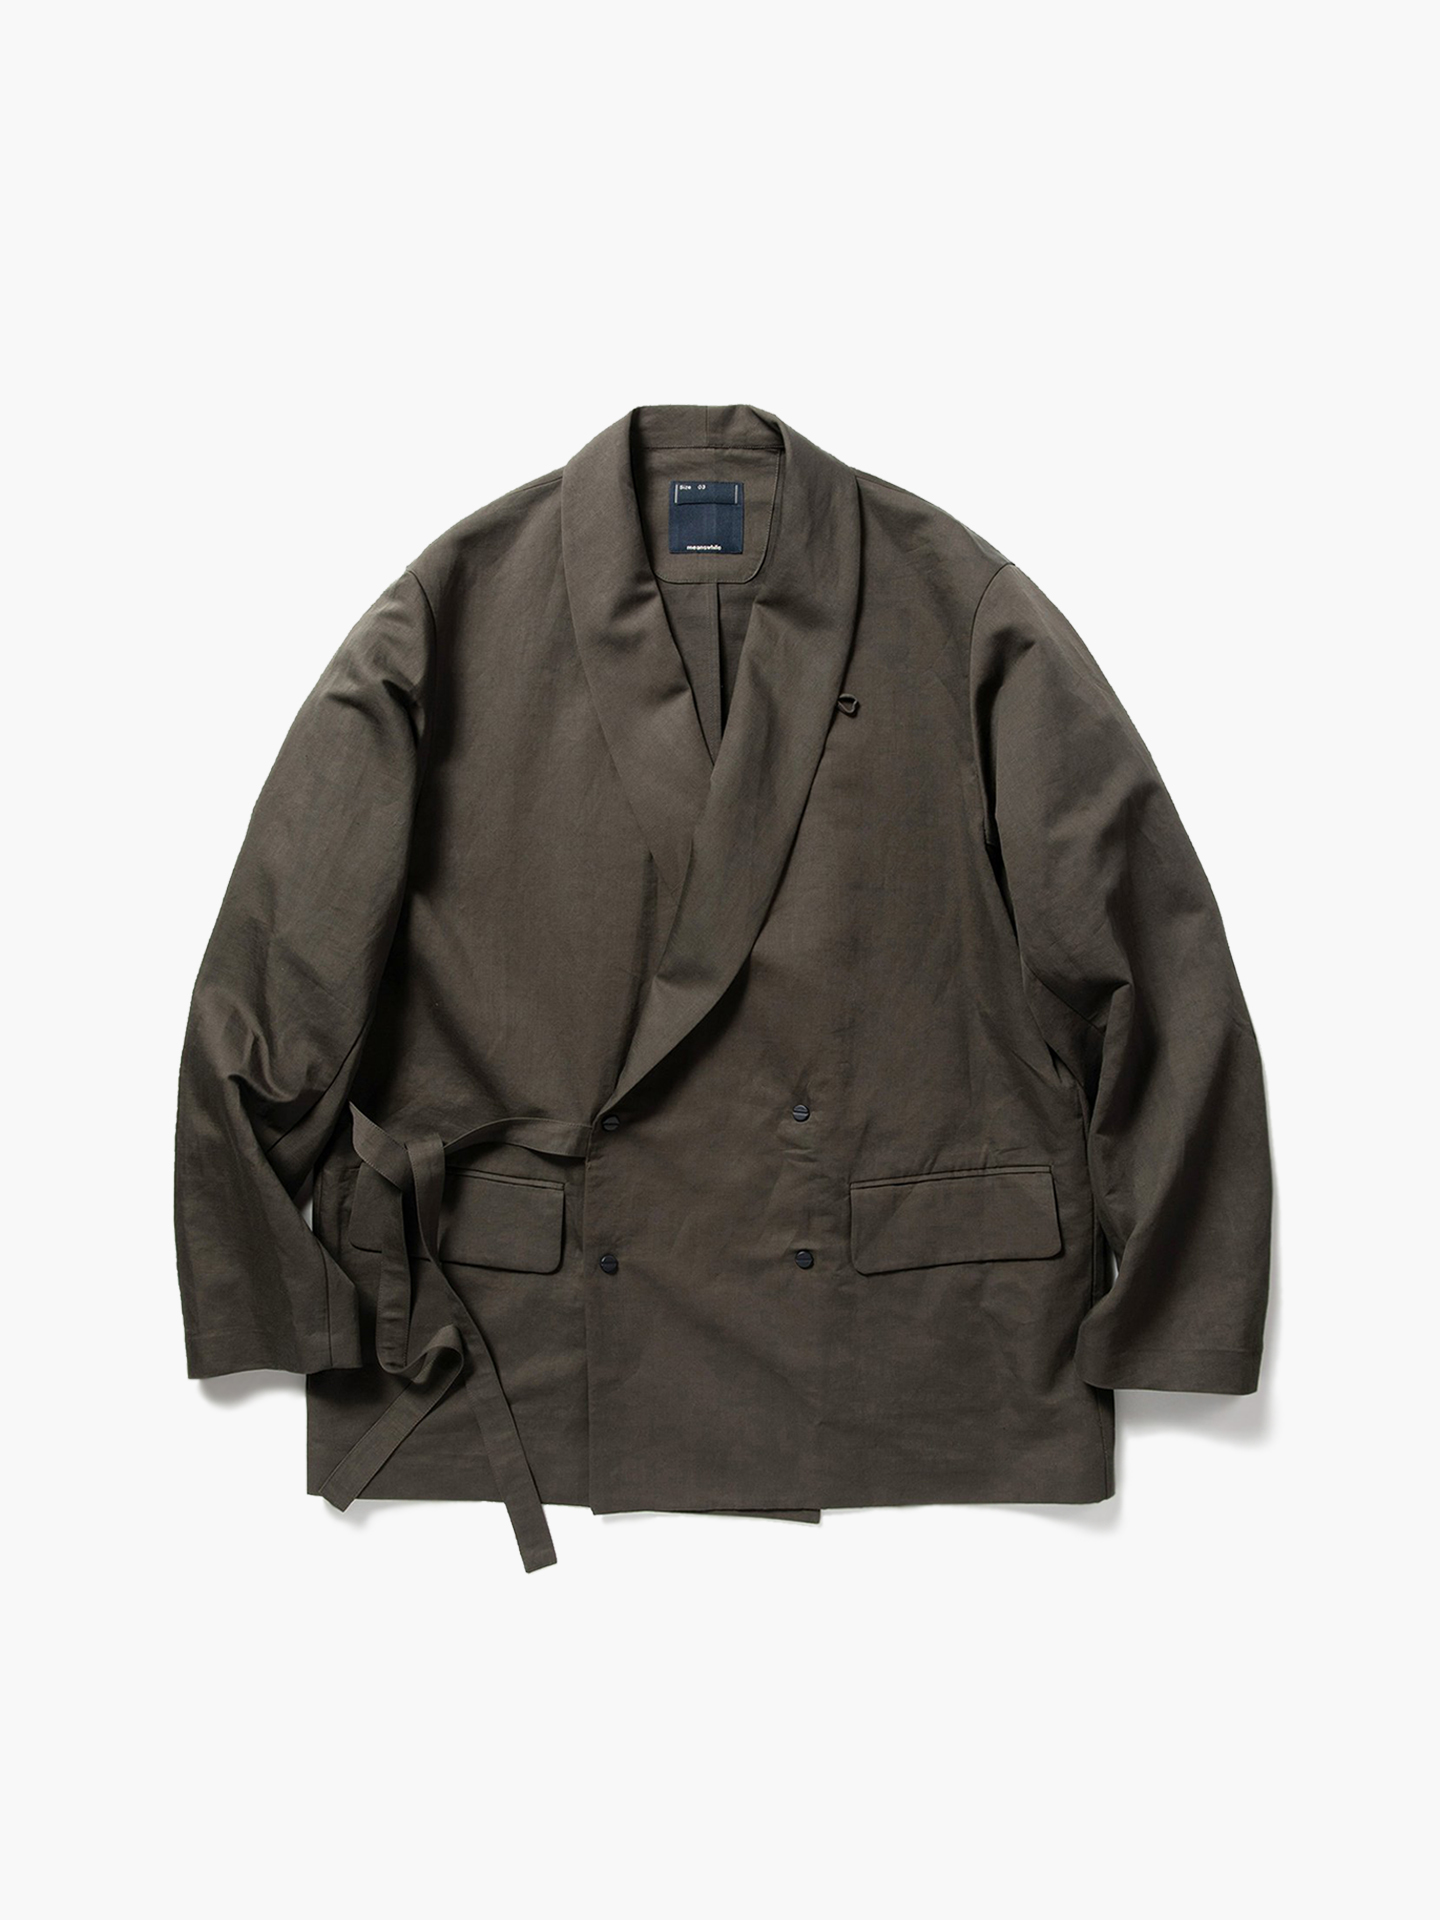 Duality Cloth Working Outfit SAMUE Куртка-пиджак, 54% лен, 46% хлопок, размер M